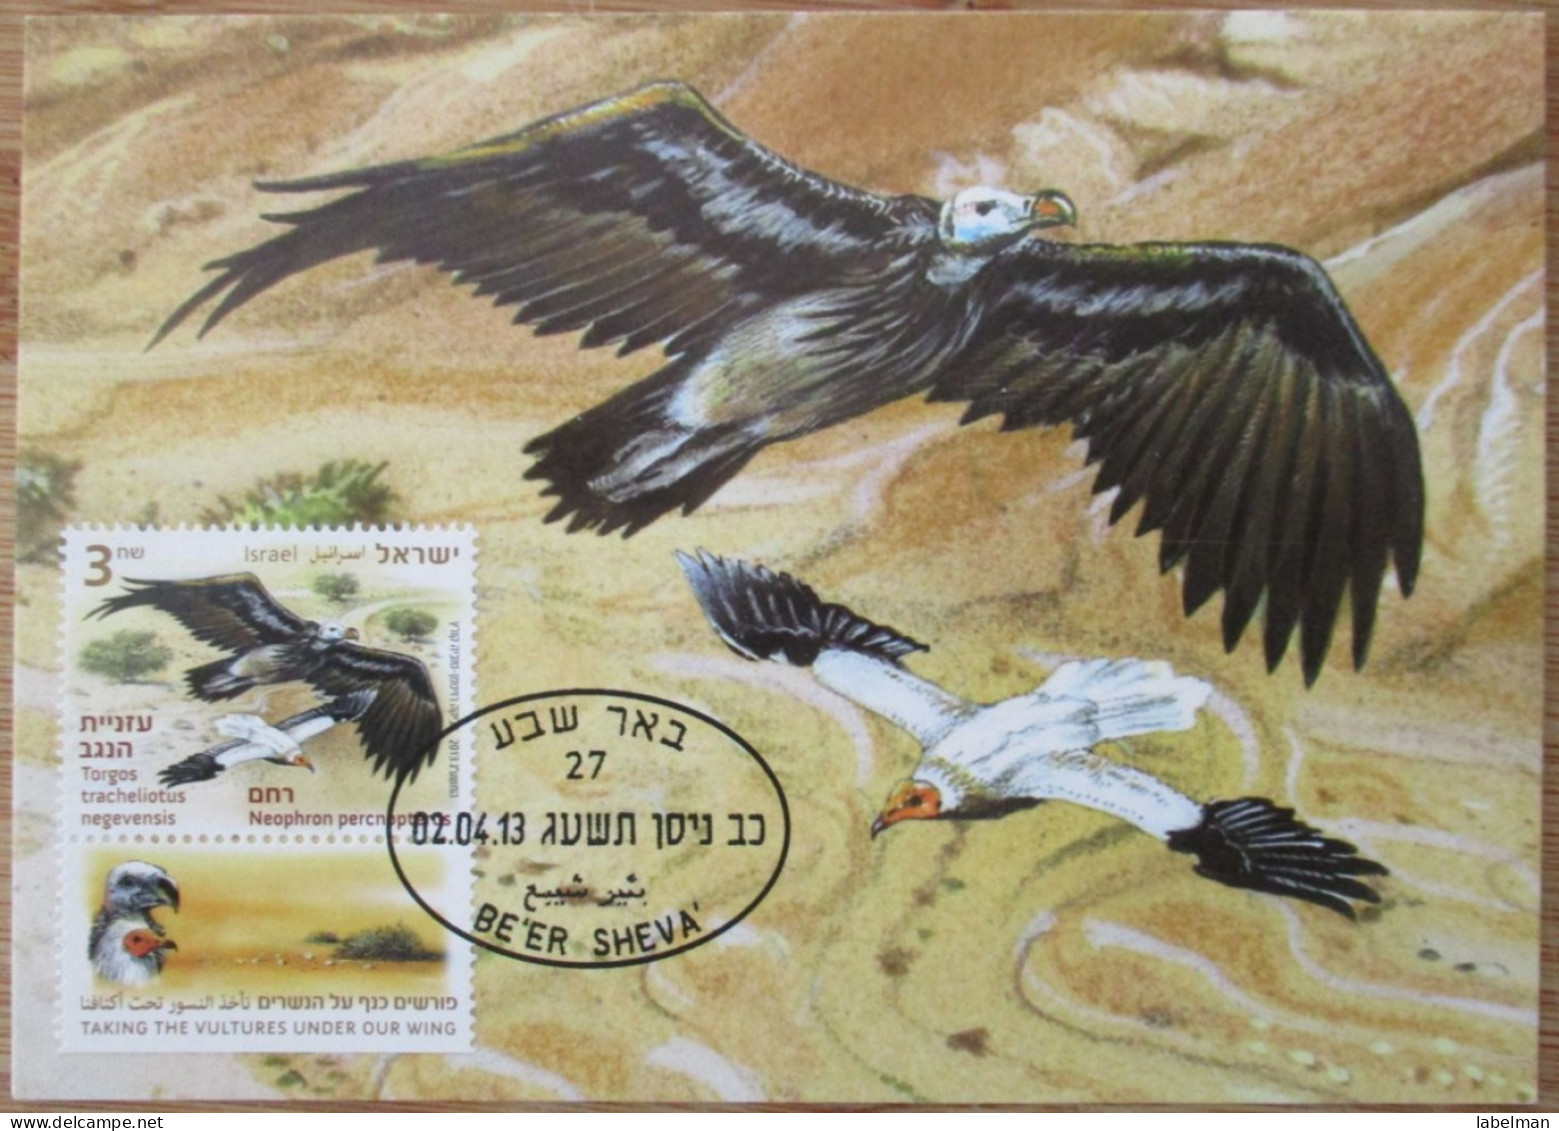 ISRAEL 2013 VULTURE GYPAETUS BARBATUS PALPHOT MAXIMUM CARD STAMP FIRST DAY OF ISSUE POSTCARD CARTE POSTALE POSTKARTE - Maximumkarten